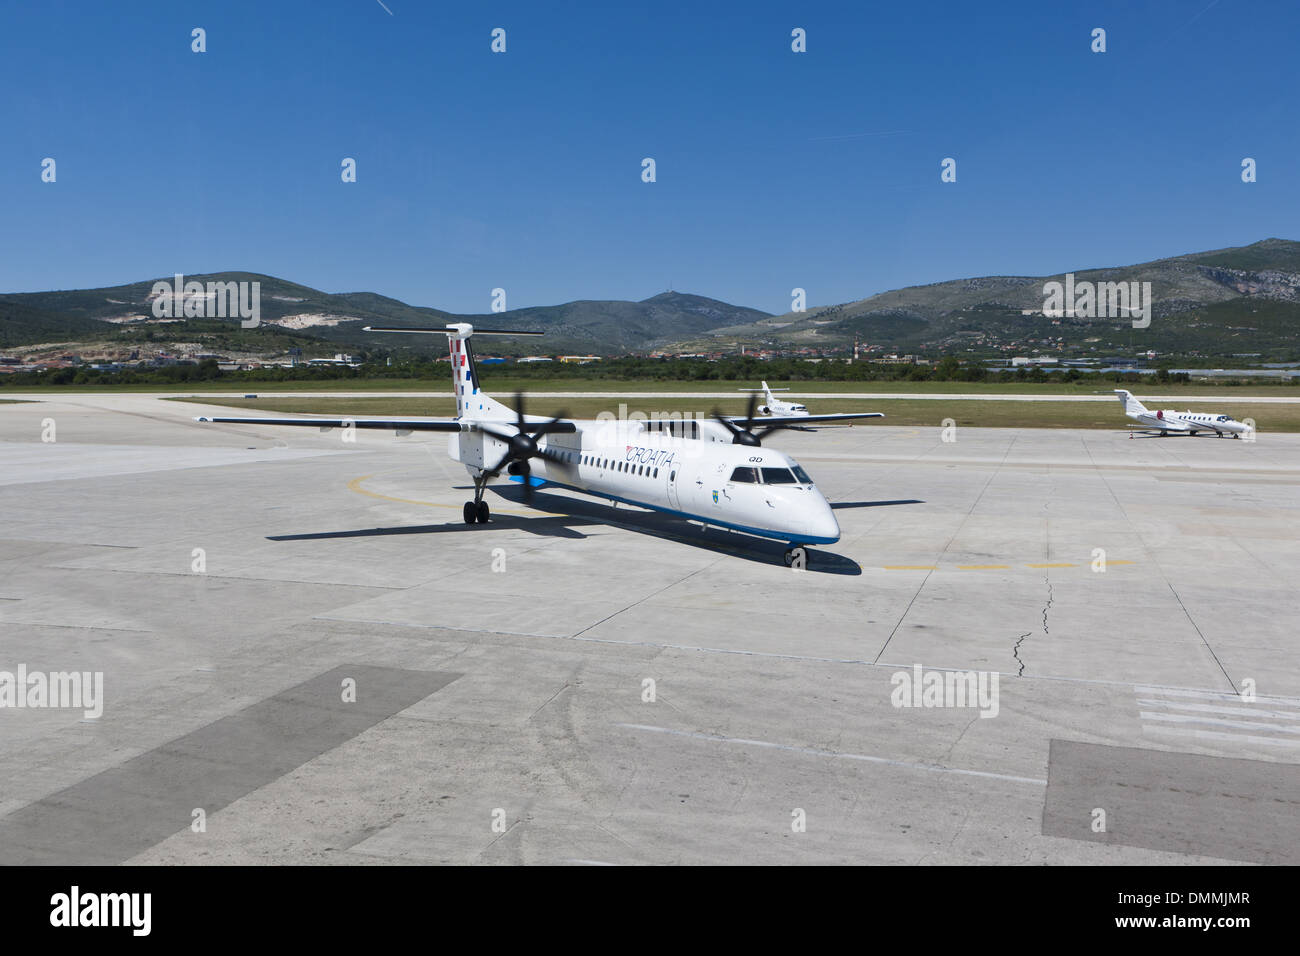 Croatia, Split, Propeller plane at airport Stock Photo